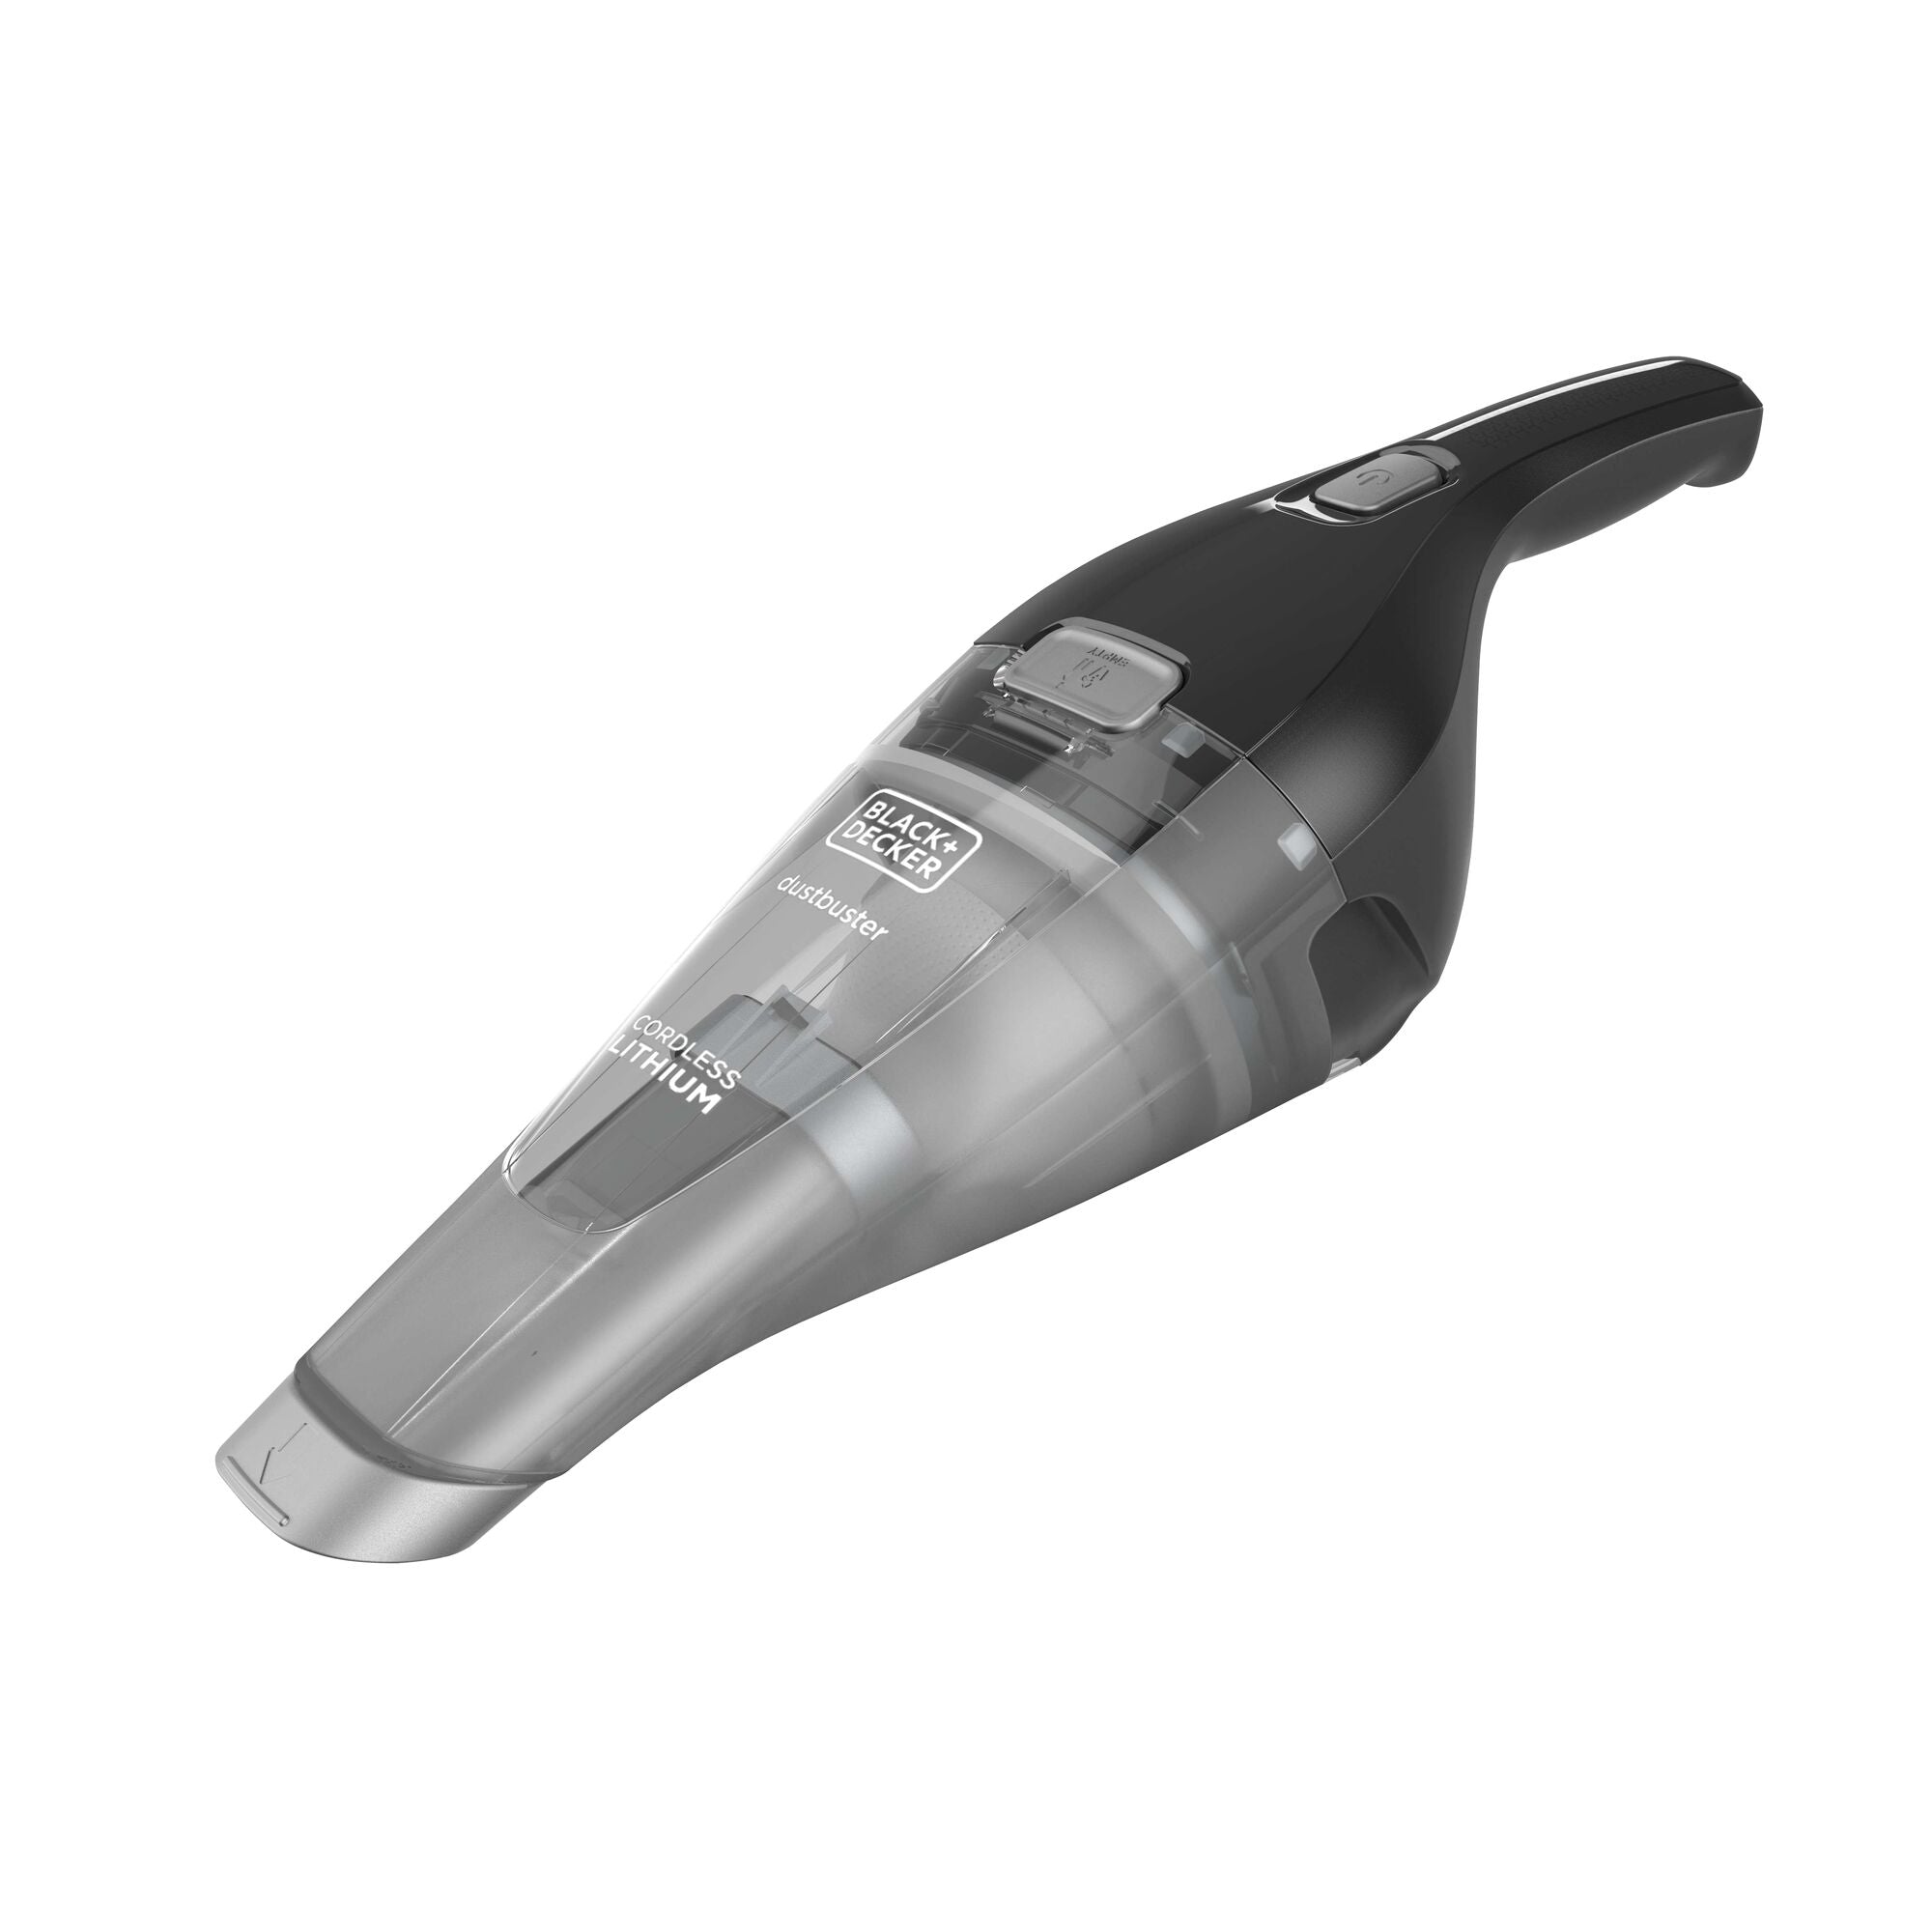 Dustbuster 7.2V 2.0Ah Cordless Hand Vacuum- Black